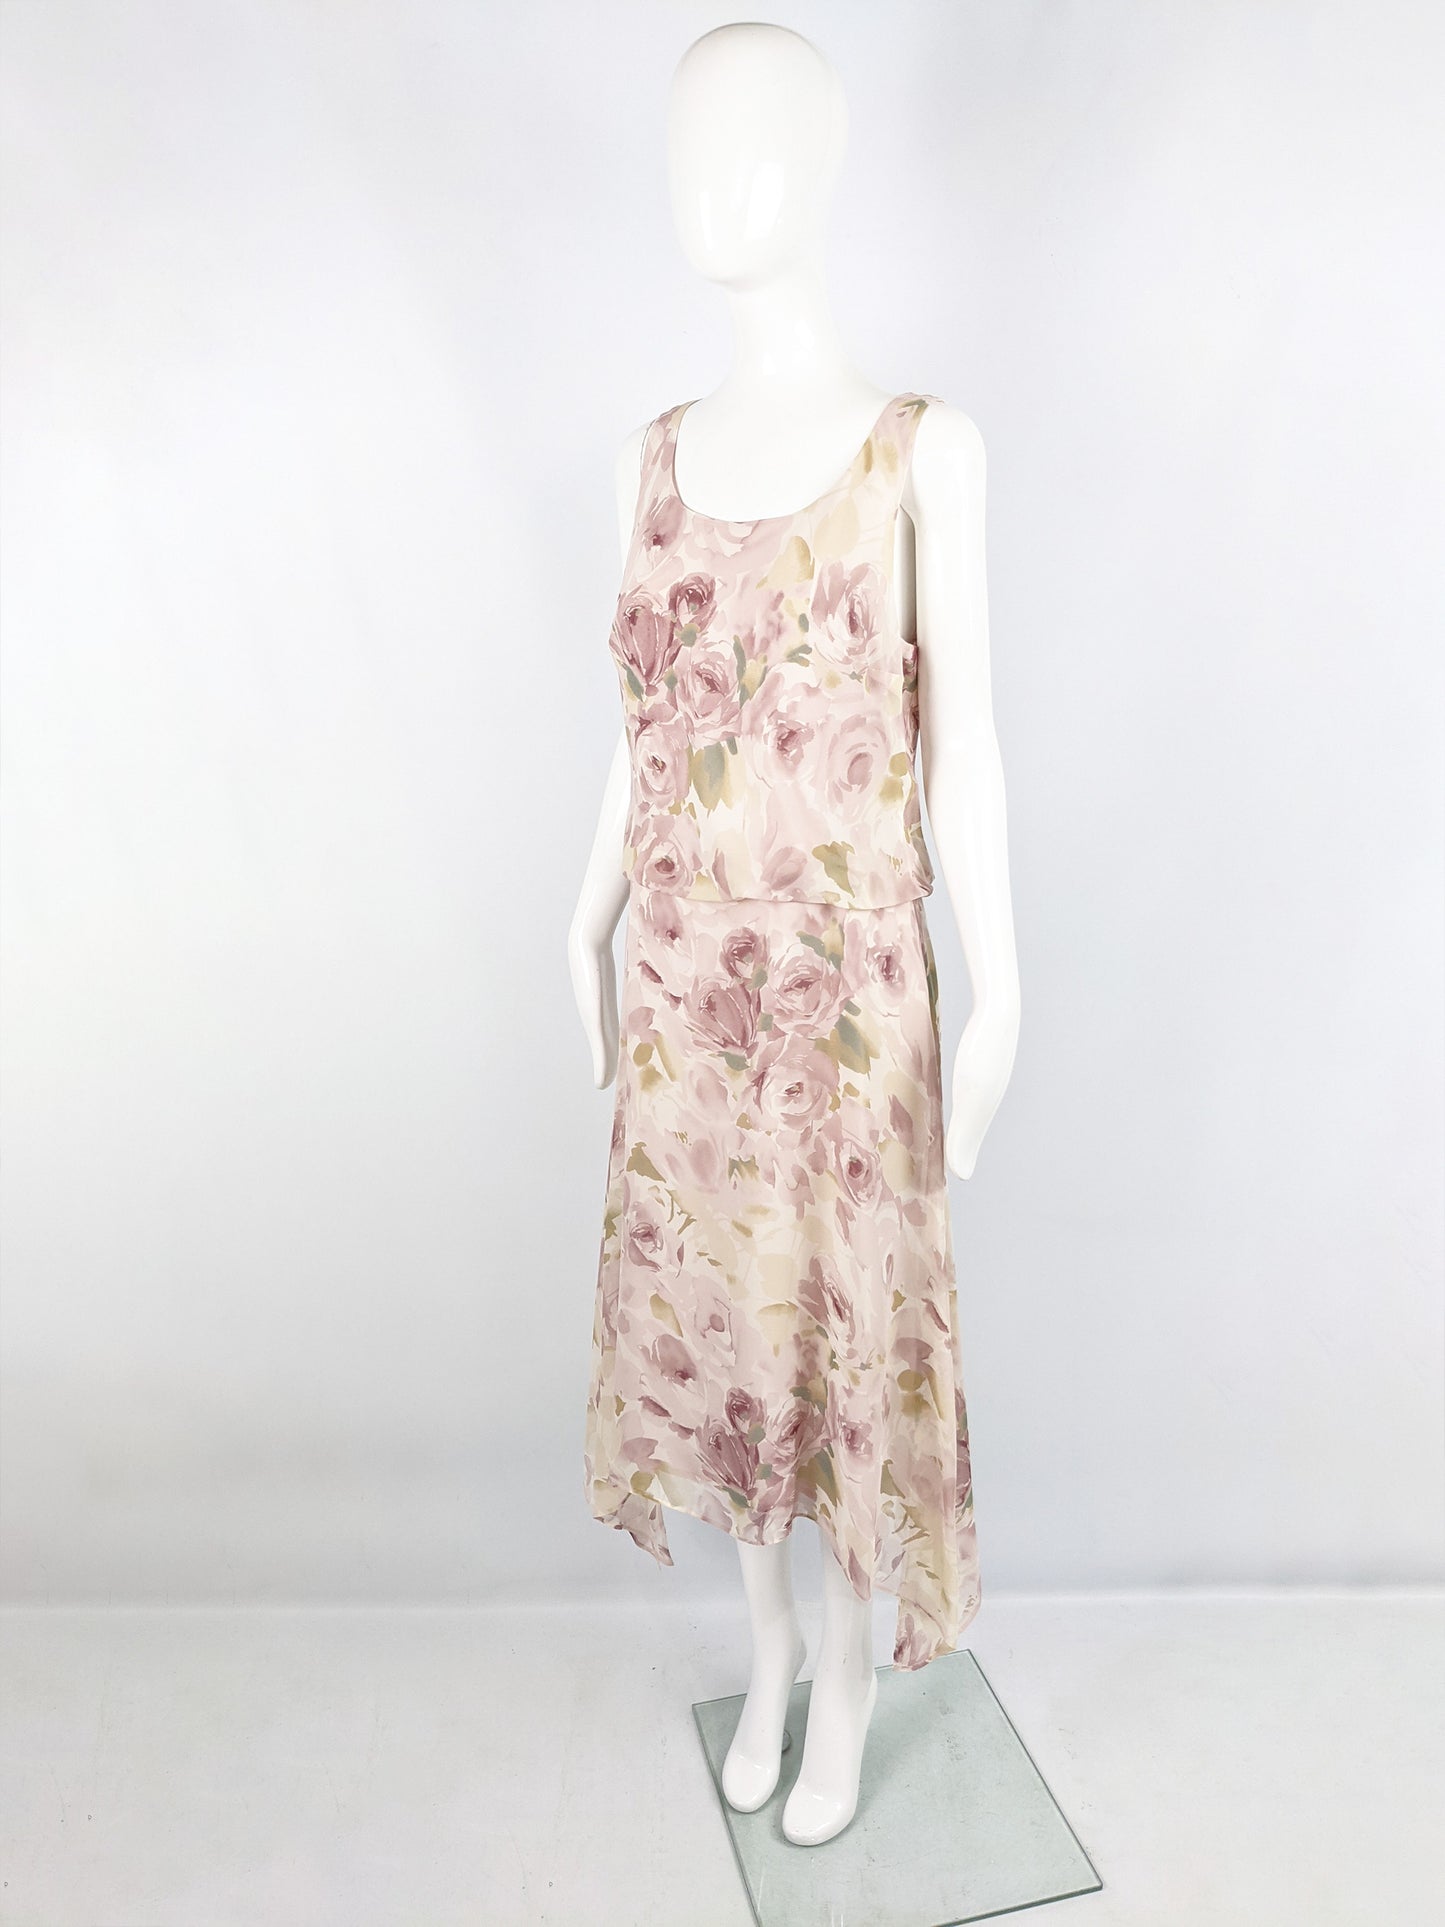 Vintage Pastel Sheer Floral Pure Silk Chiffon Blouson Dress, 1990s